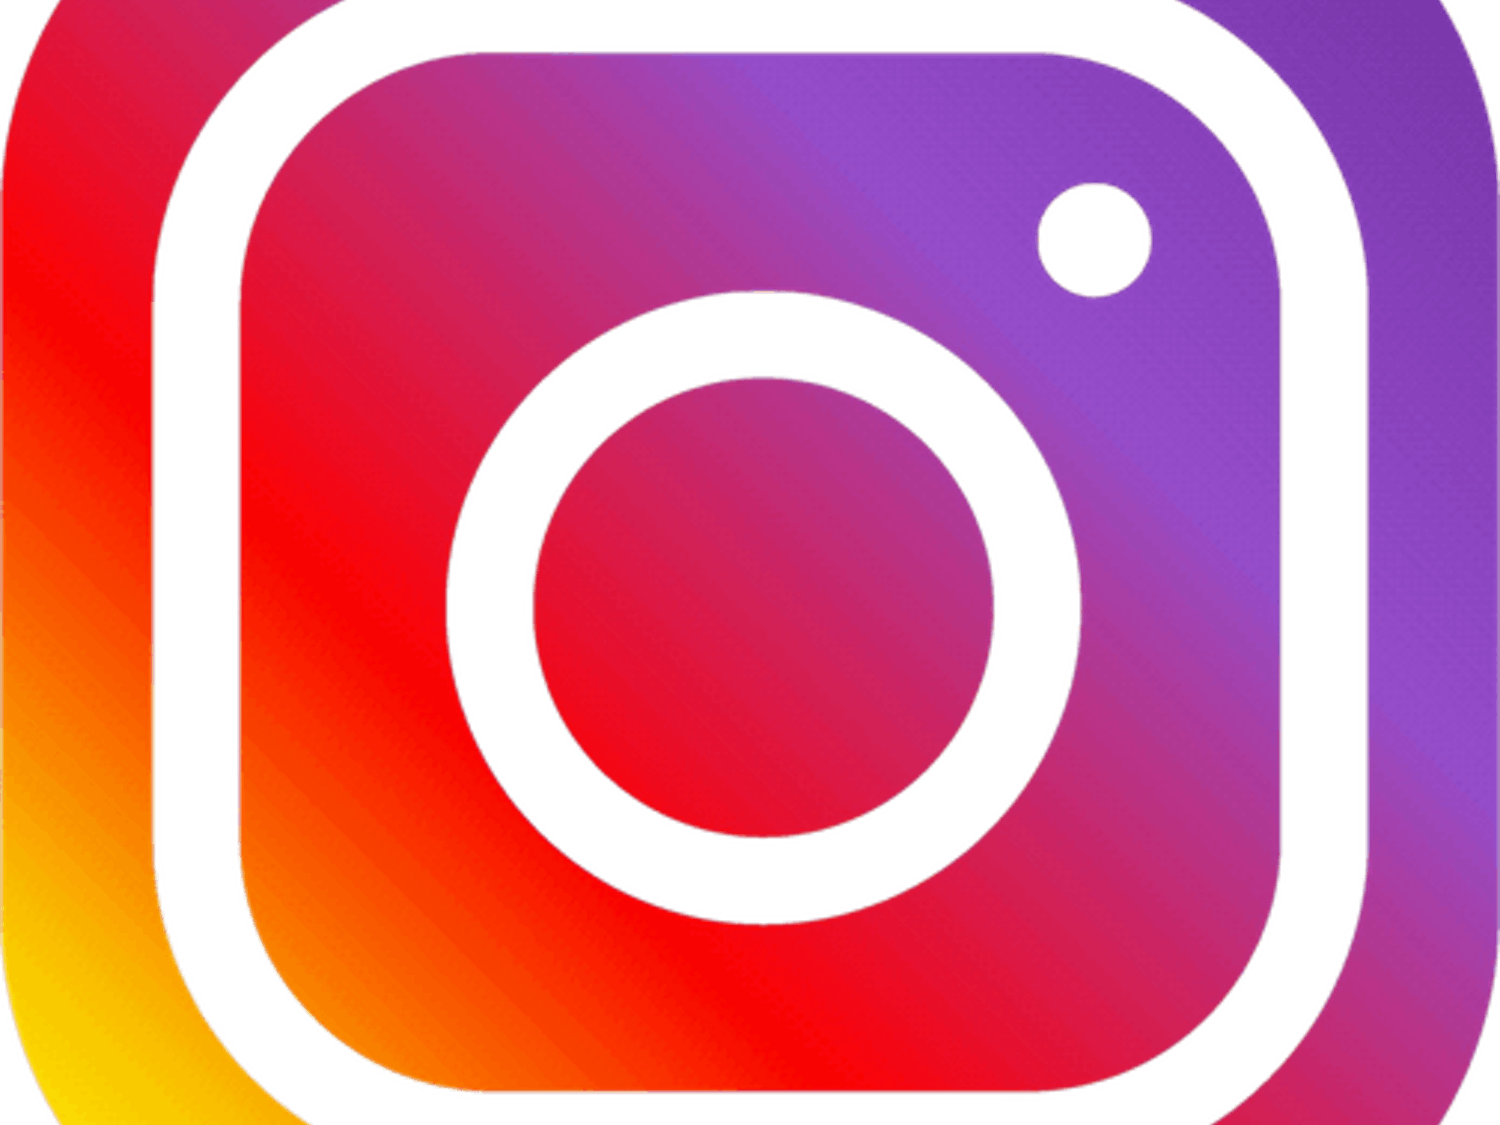 (Photo courtesy of Flickr / “Instagram-logo” by Ken Ken / June 21, 2022)